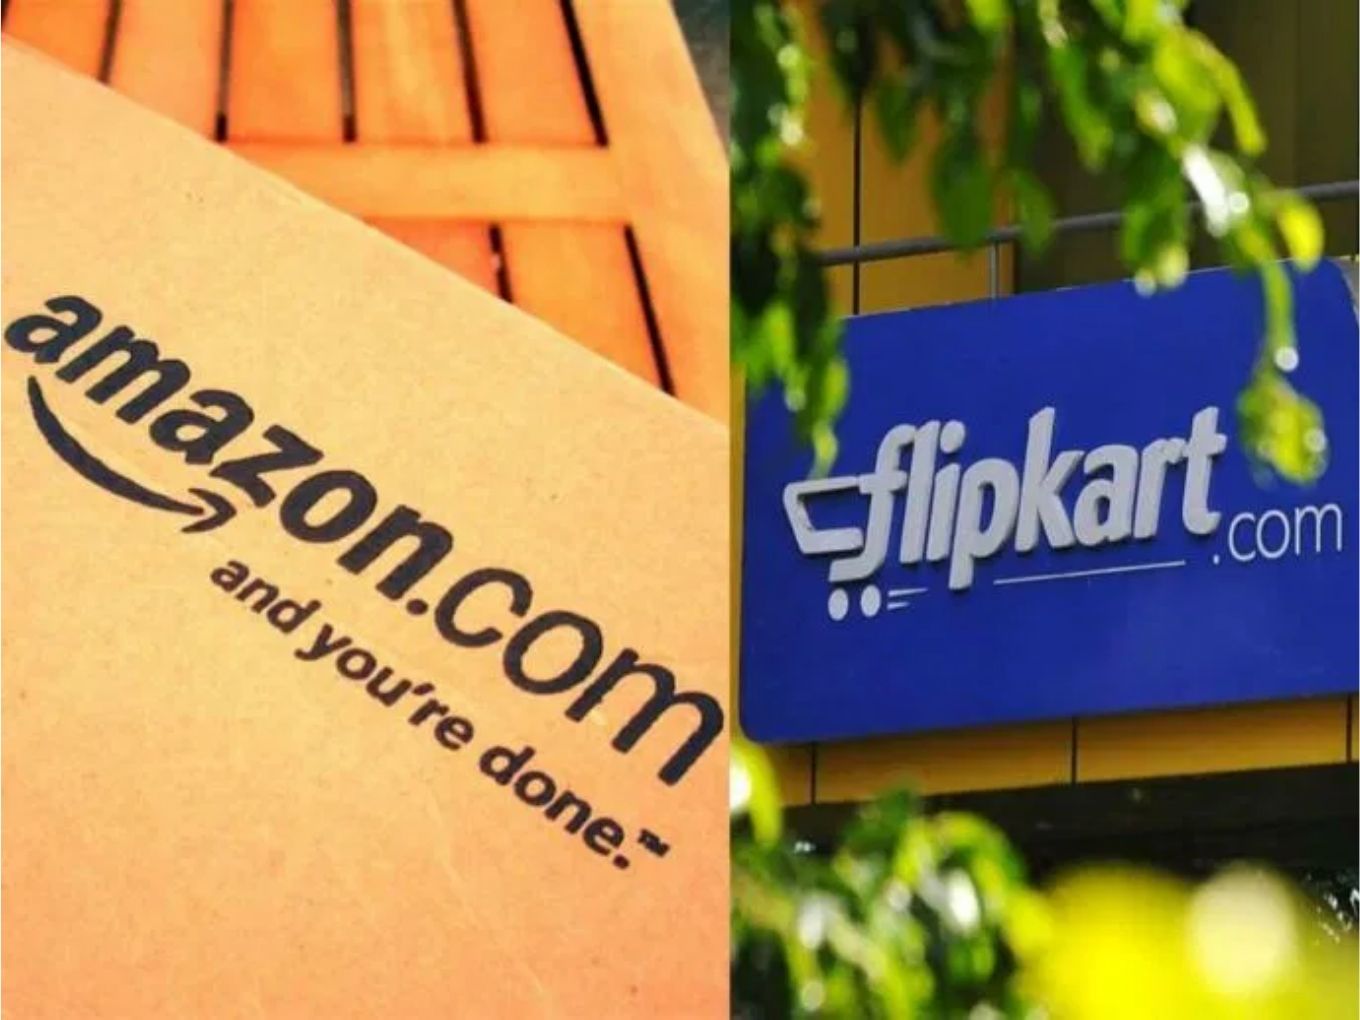 Amazon, Walmart’s Bids For CSC Estores Rejected By Indian Govt